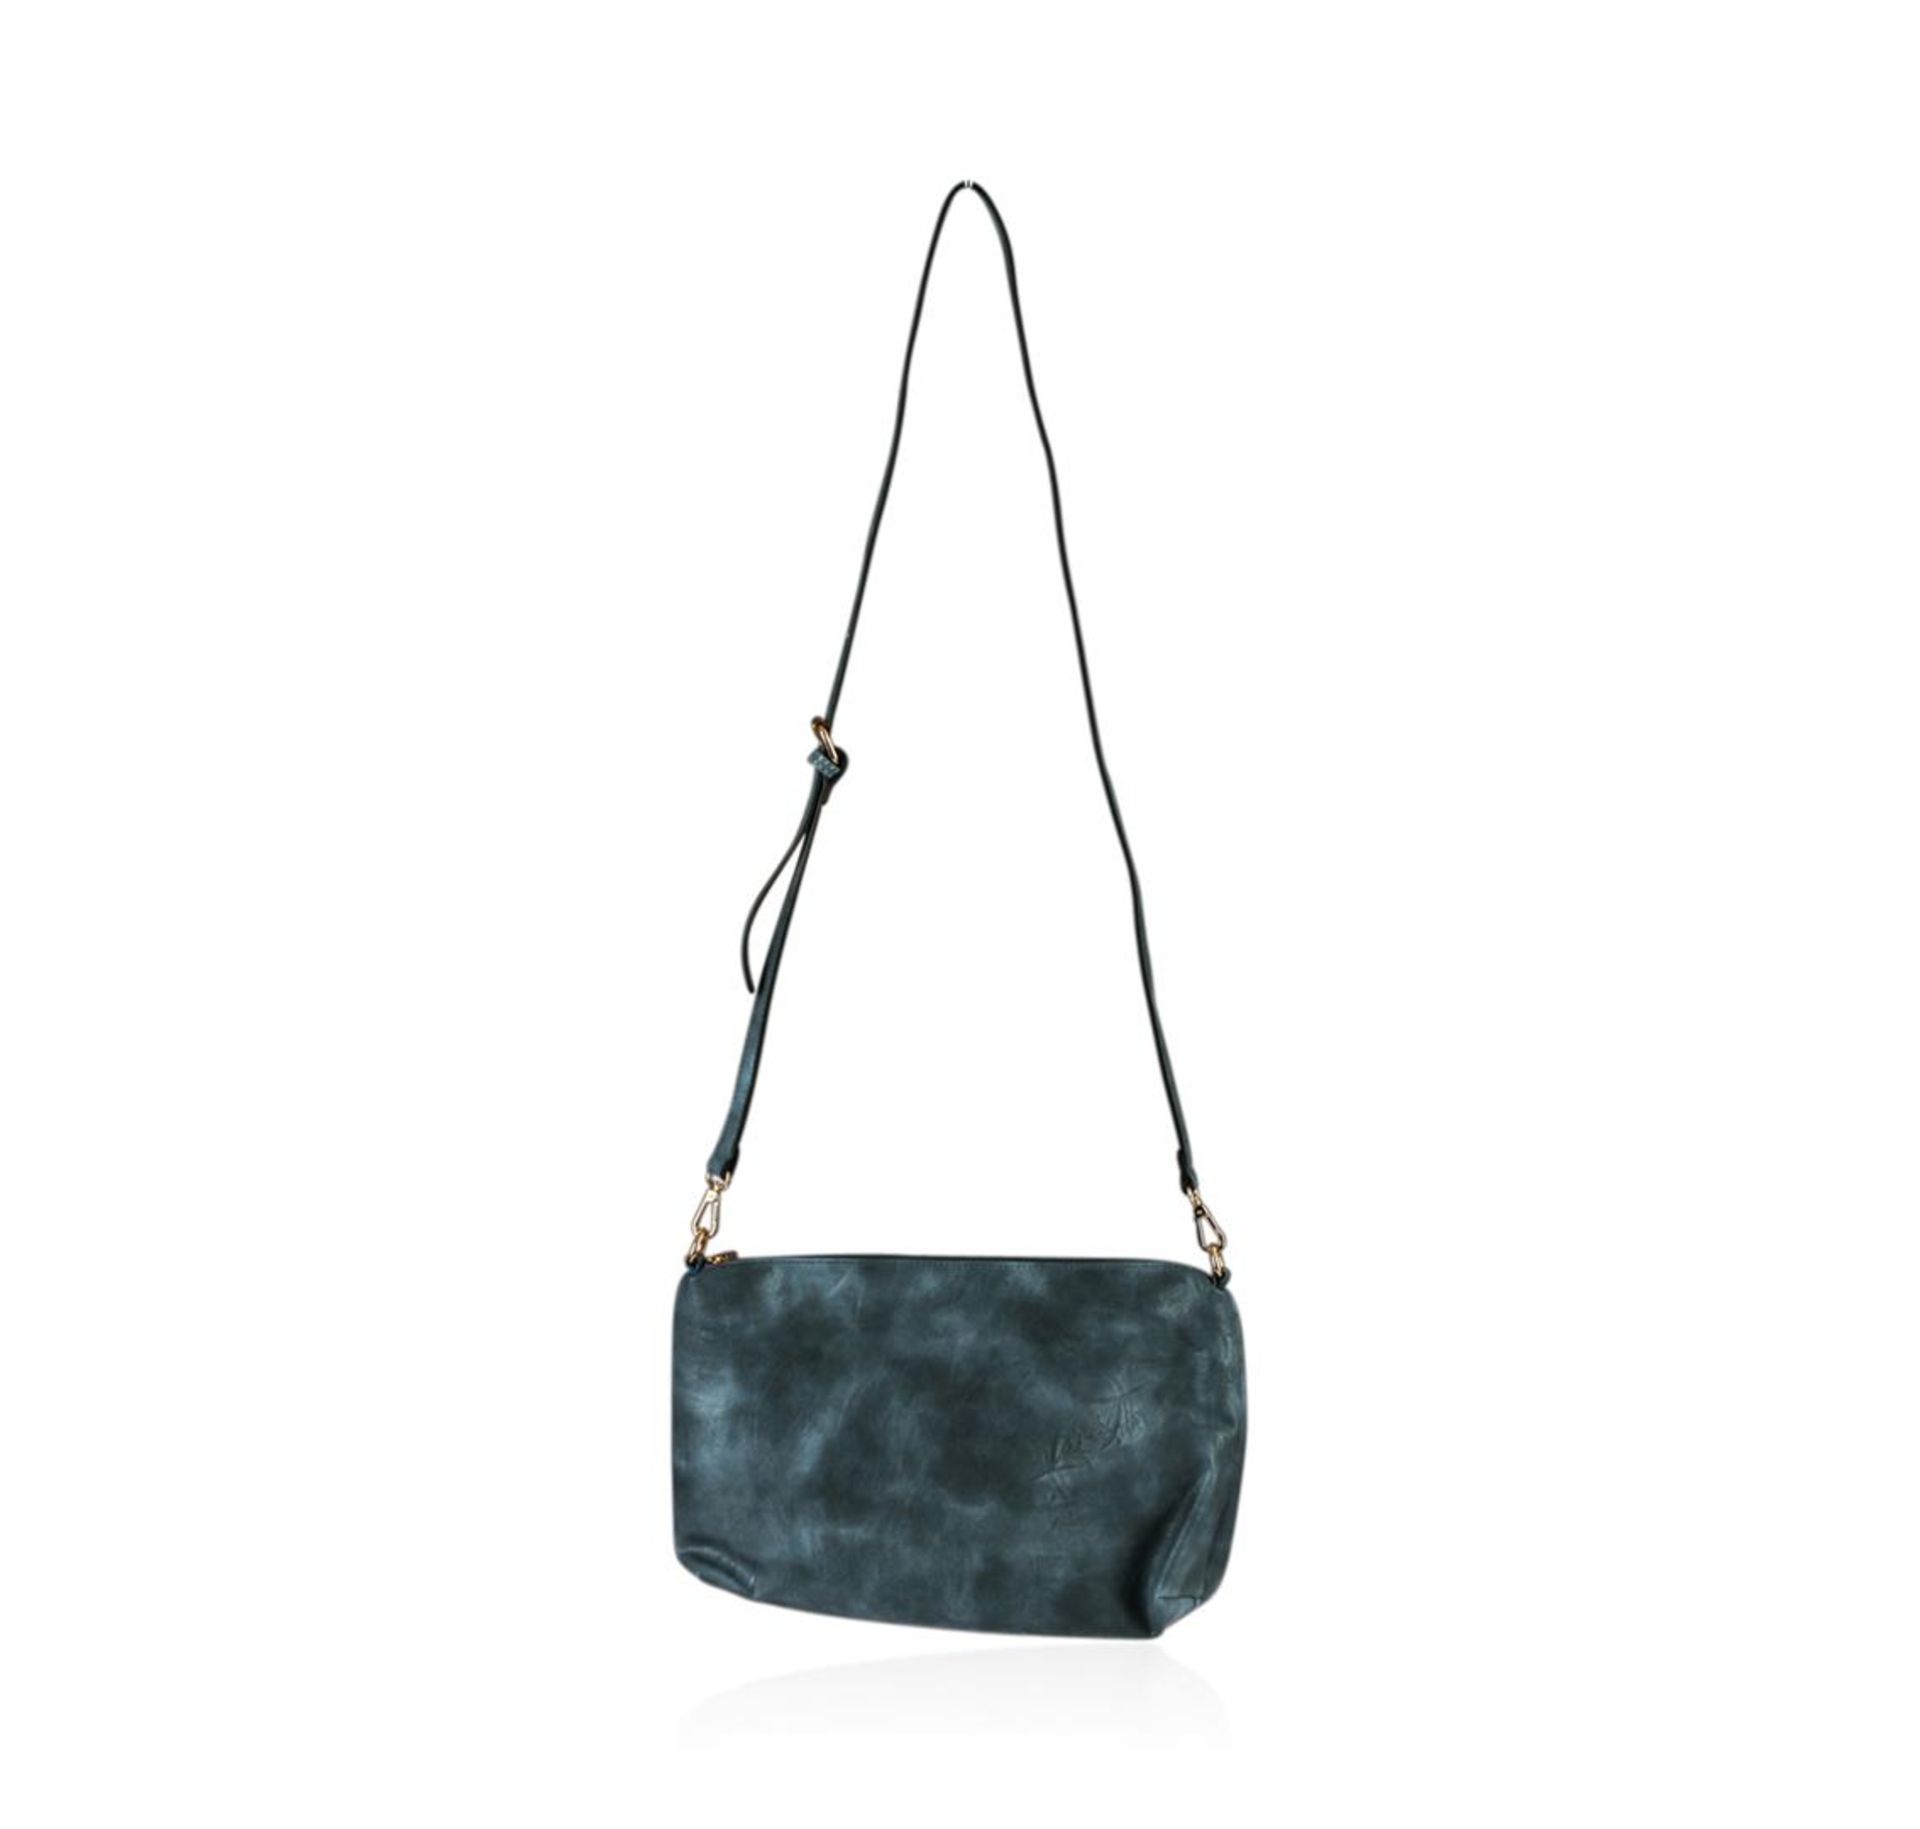 Charcoal Blue Oversized Handbag - Image 2 of 2